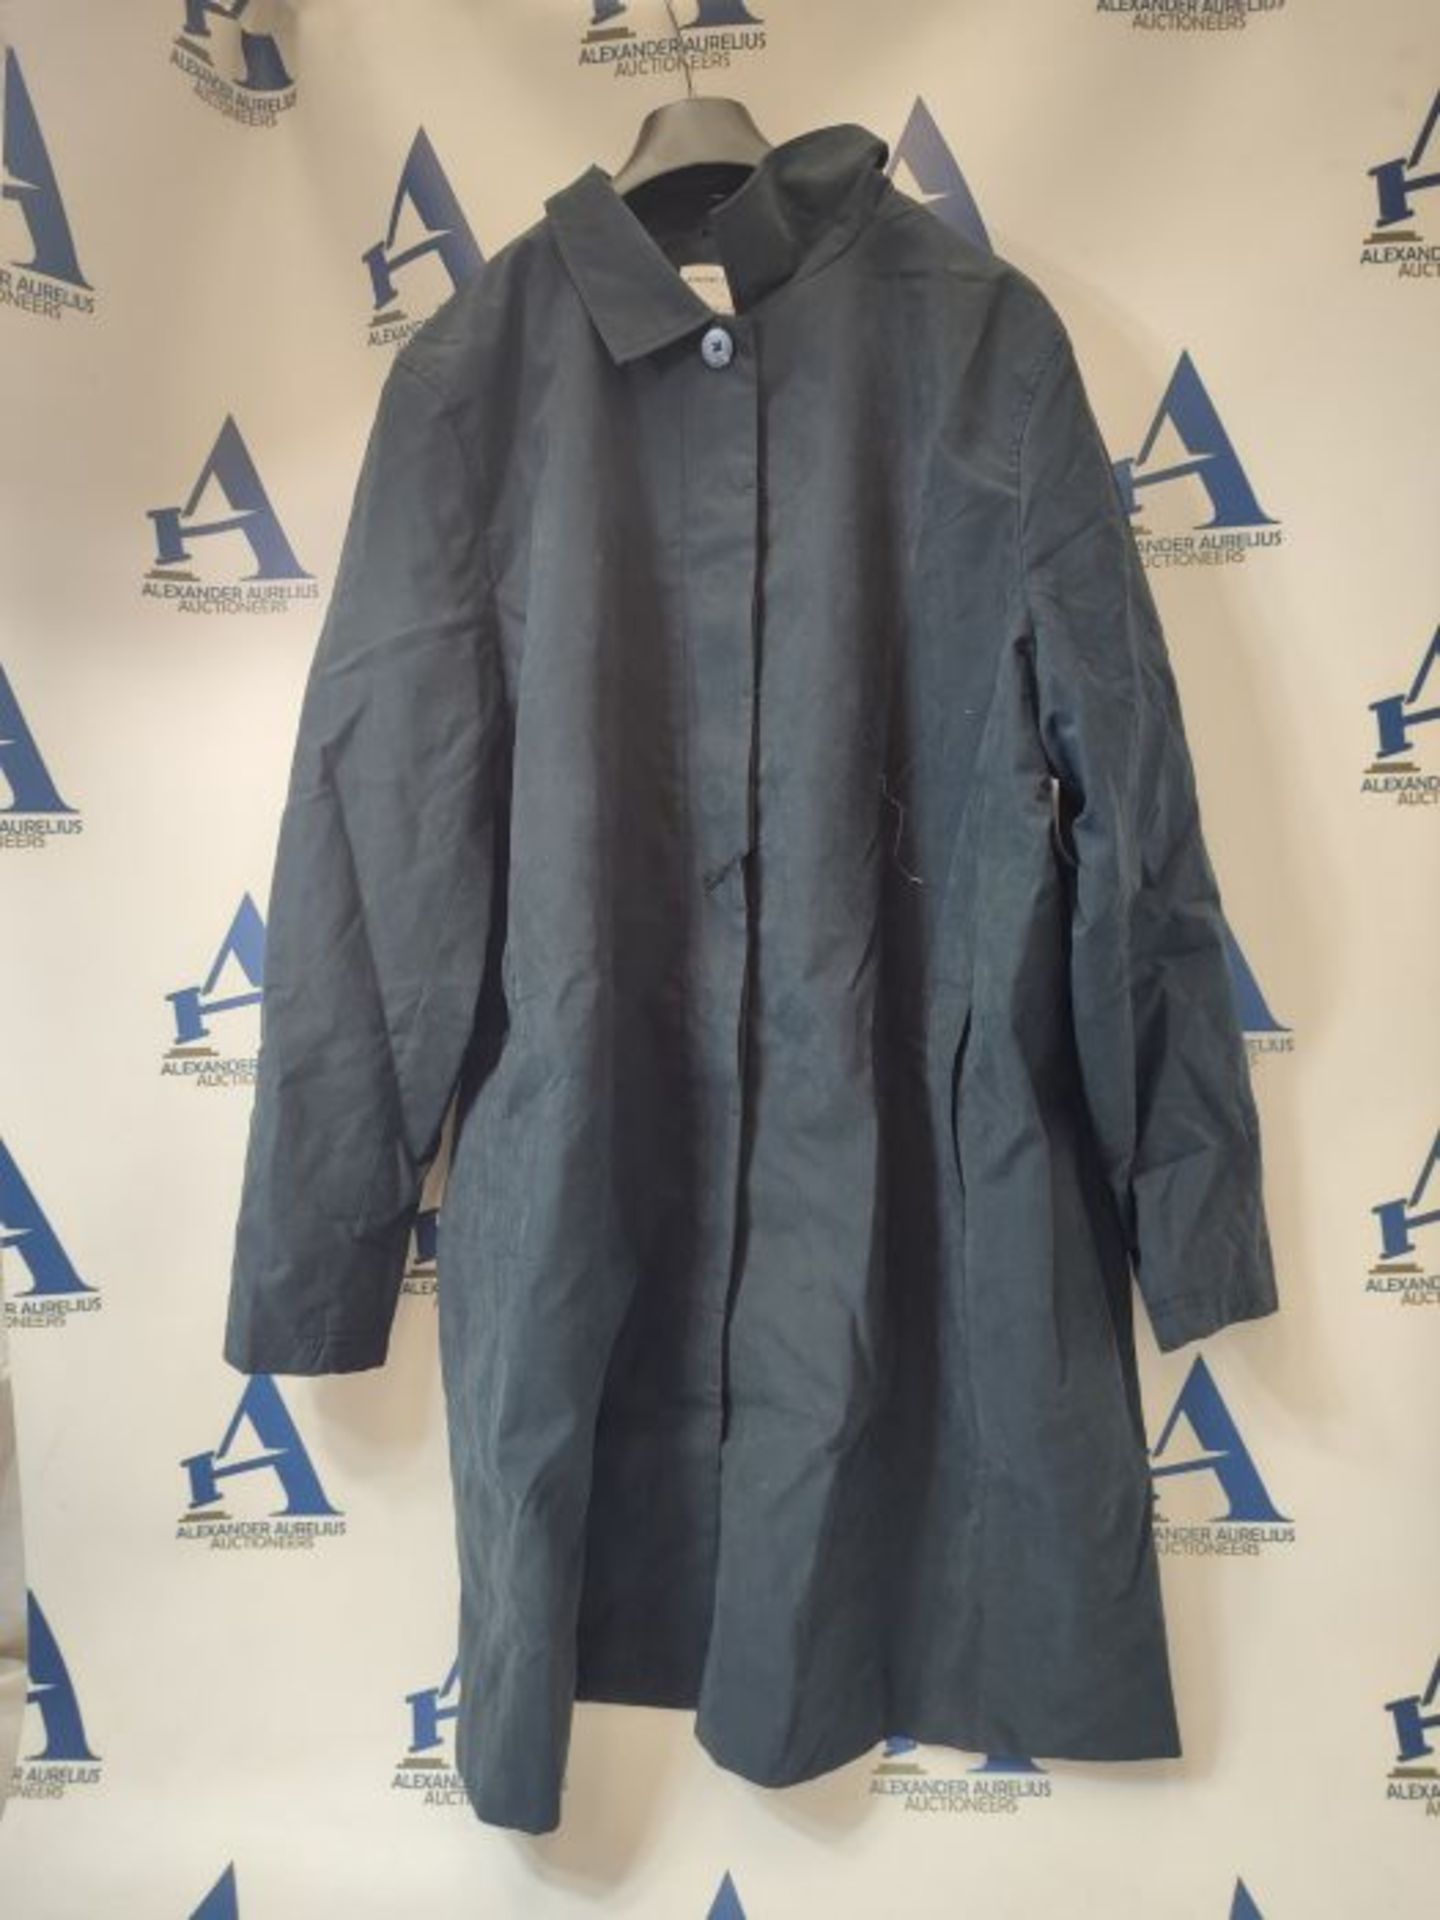 Amazon Essentials Water-resistant Trench Coat Jacket, Slate Black, XXL - Image 2 of 3